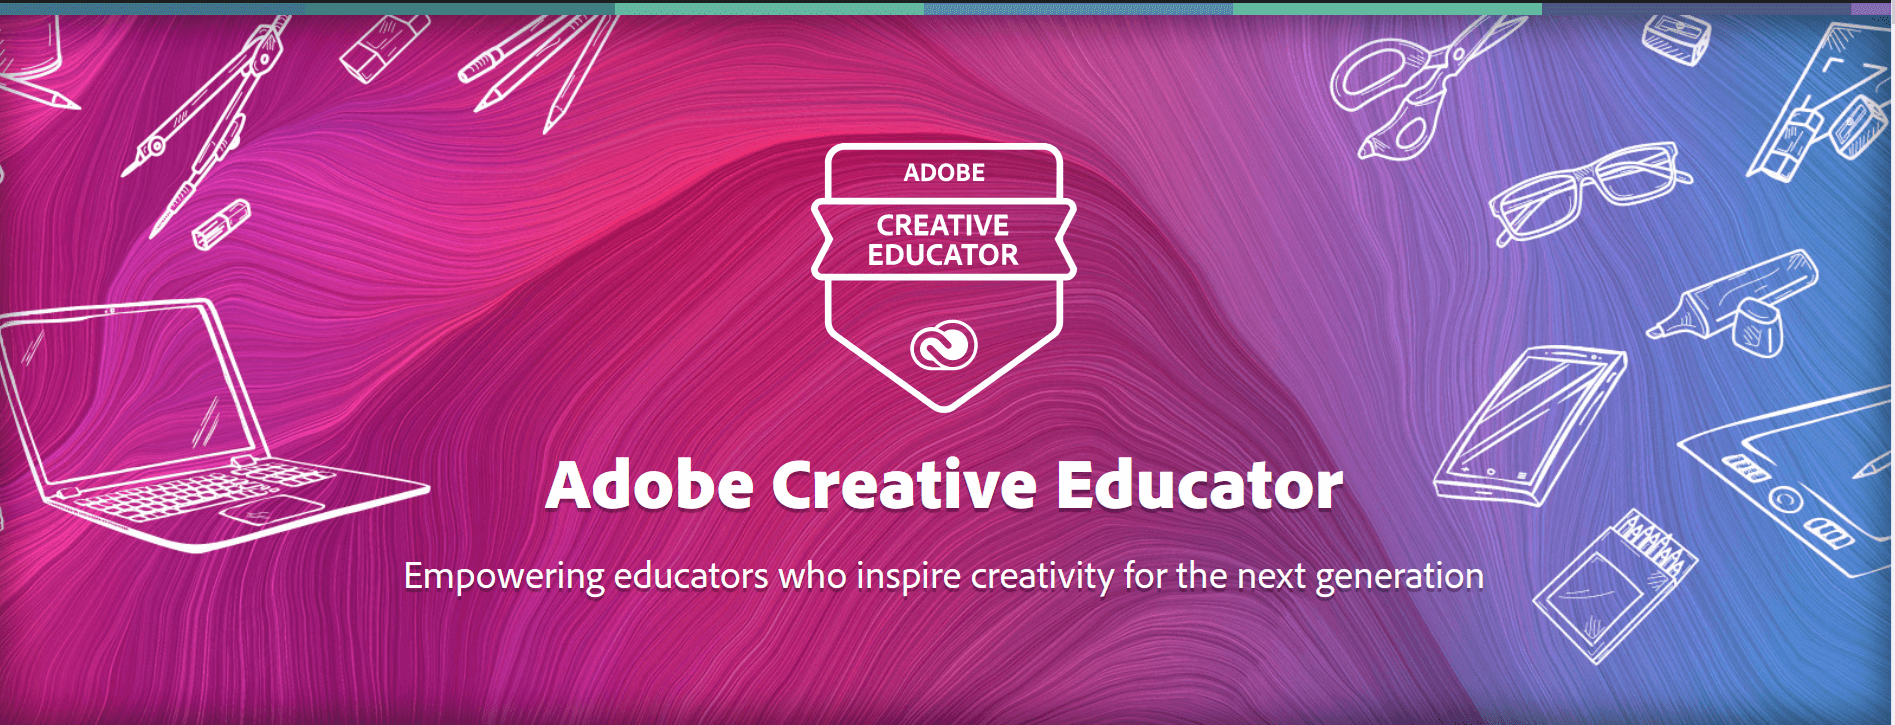 The banner for the Adobe Creative Educator program